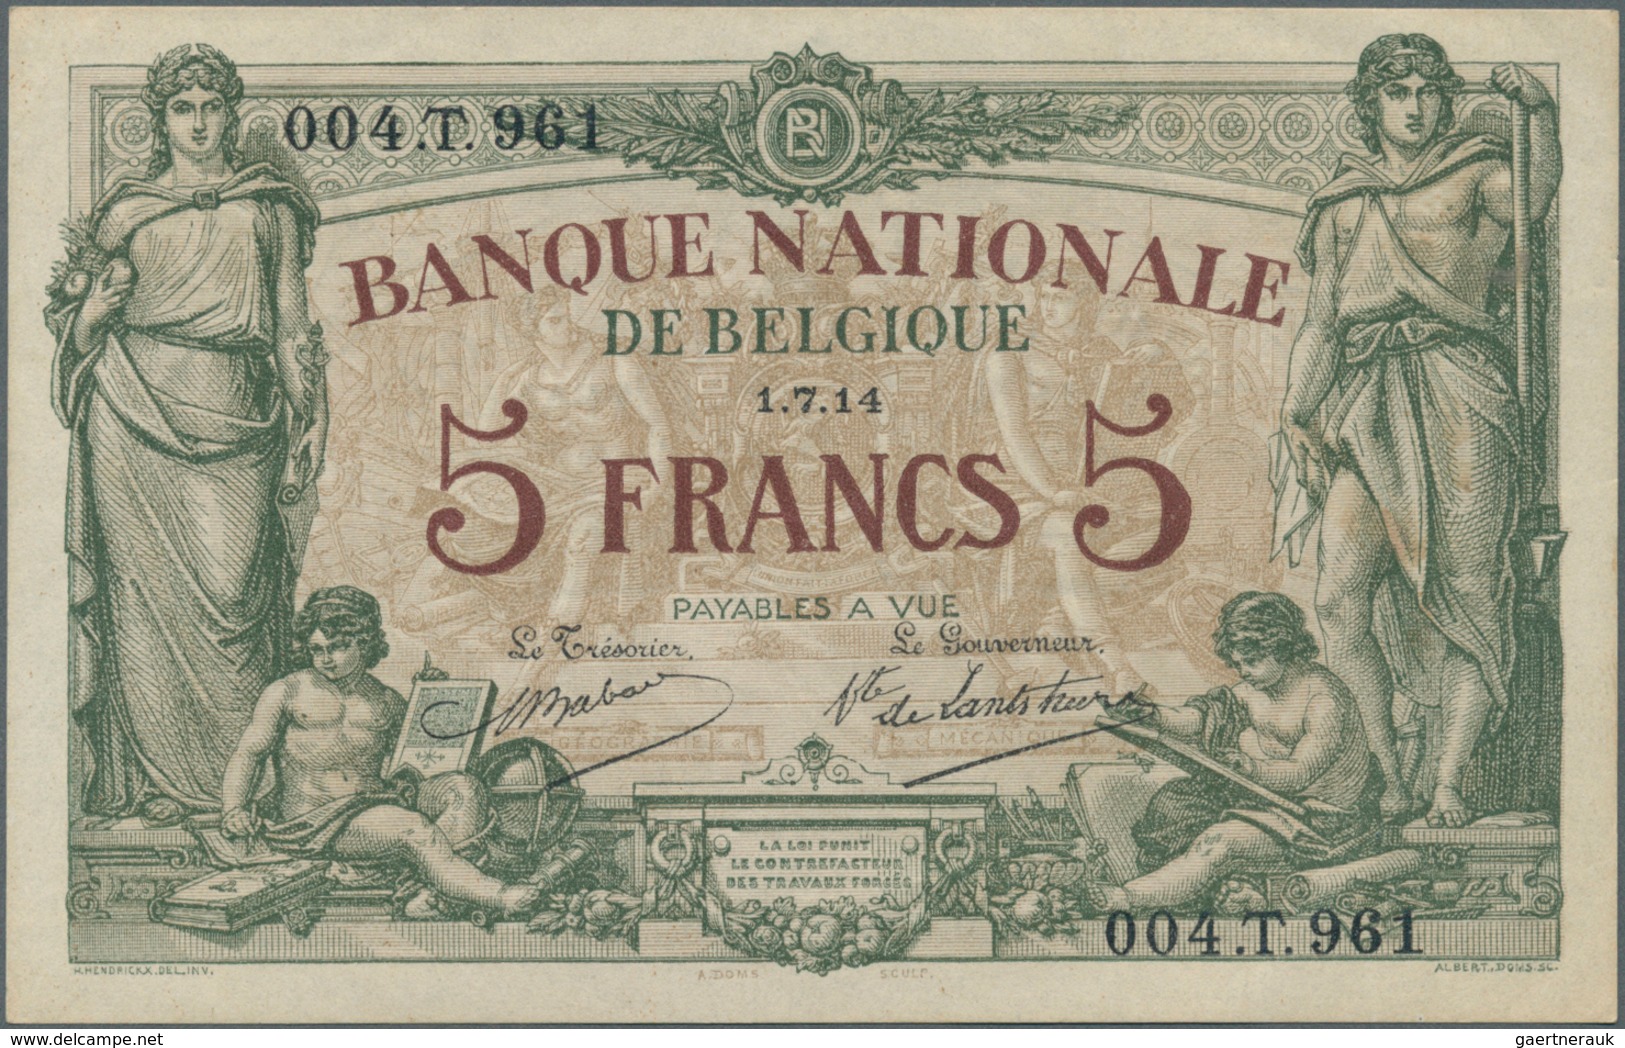 01121 Belgium / Belgien: 5 Francs 1914 P. 75, Unfolded But Light Handling In Paper, Condition: AUNC. - [ 1] …-1830 : Before Independence